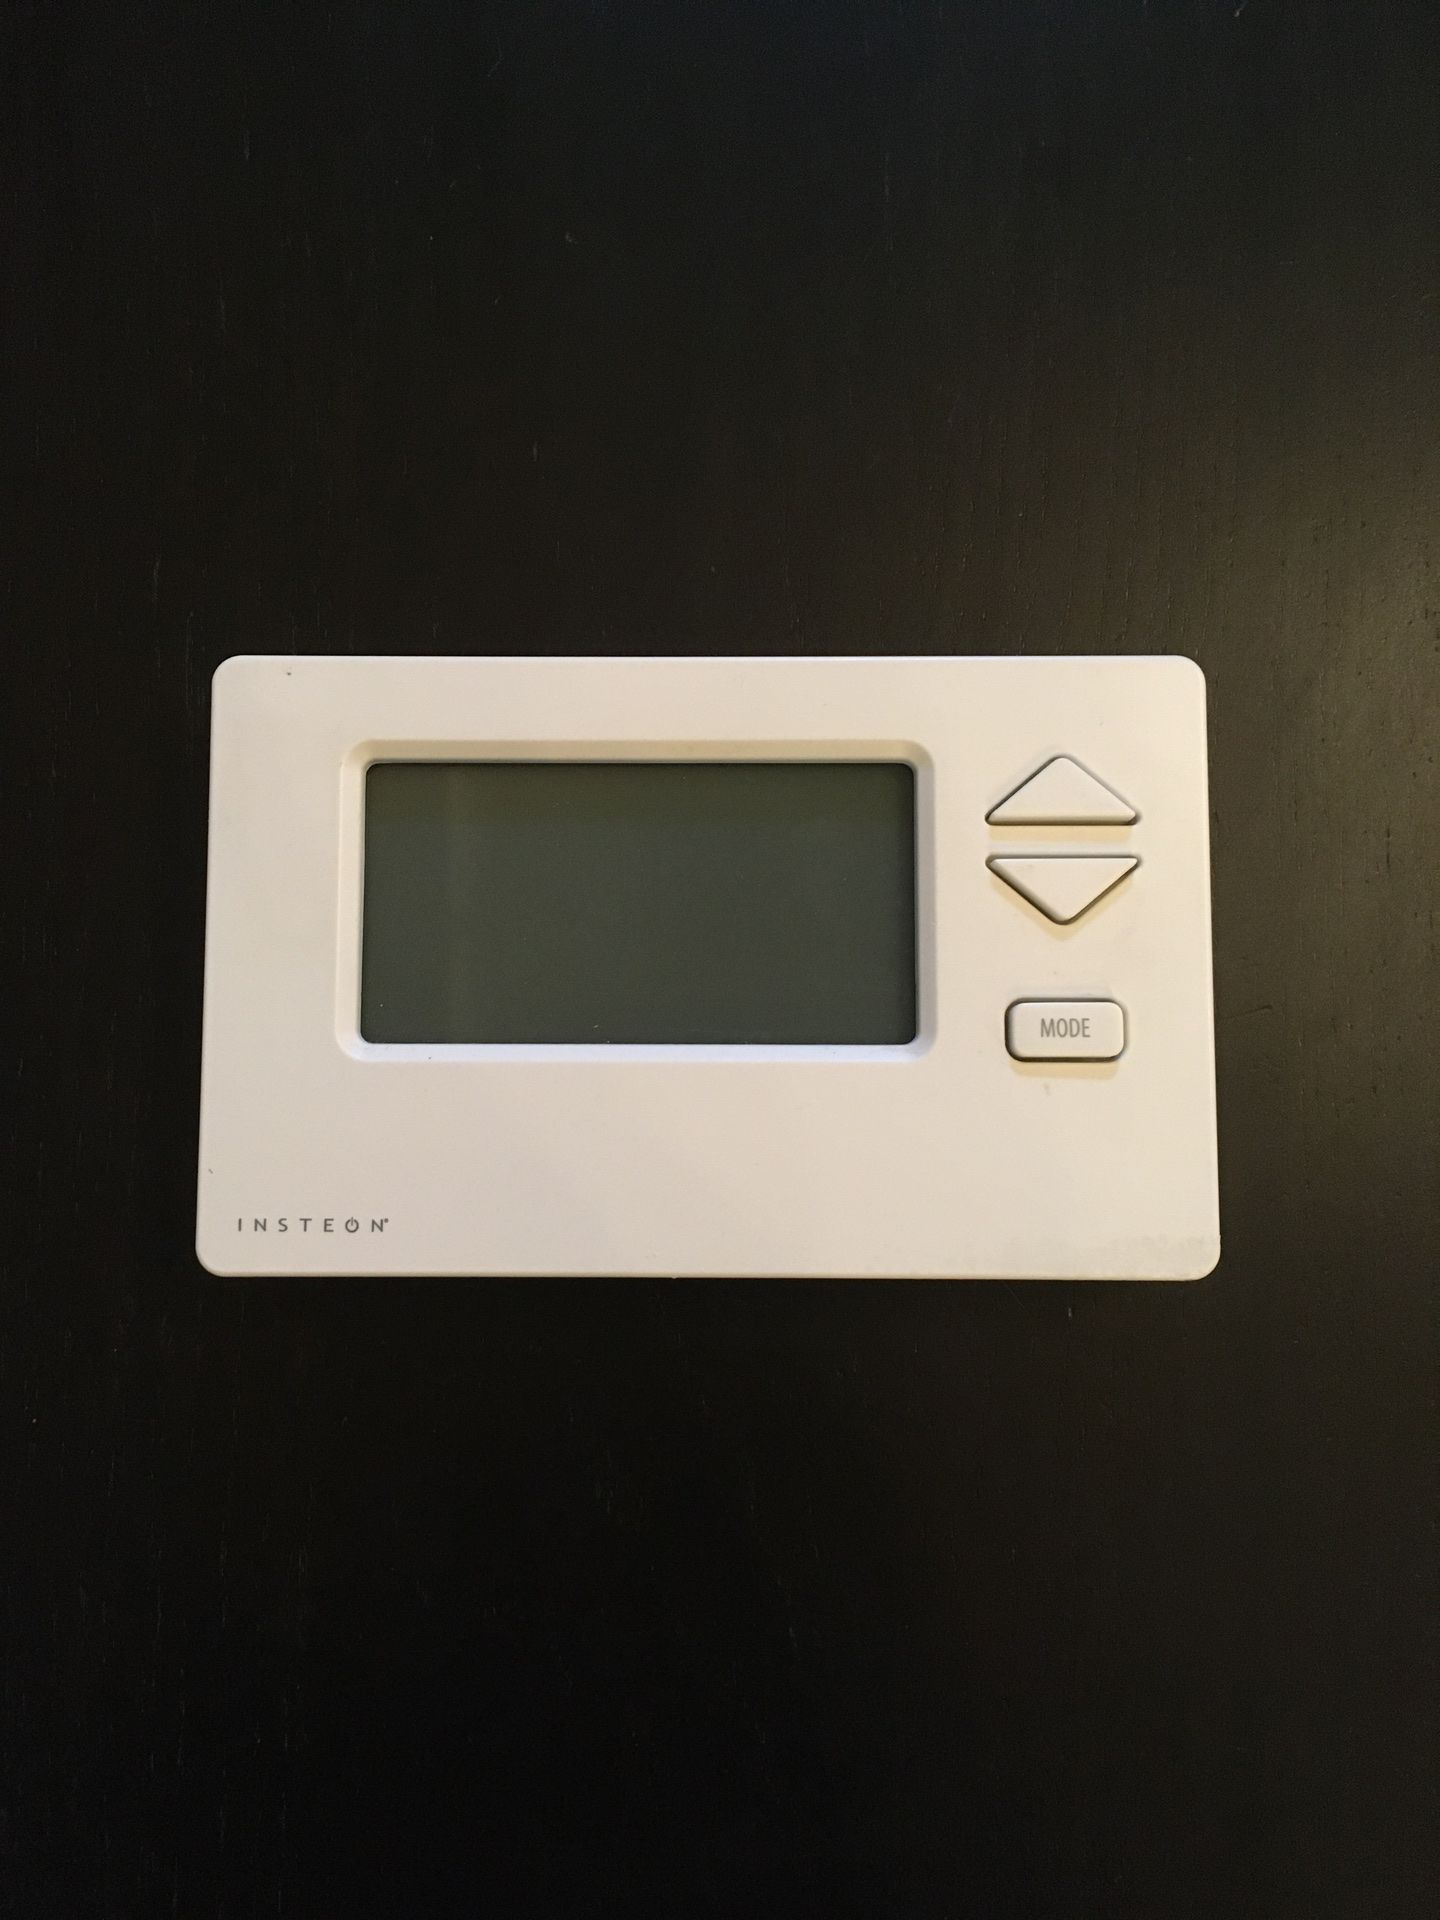 Insteon smart thermostat